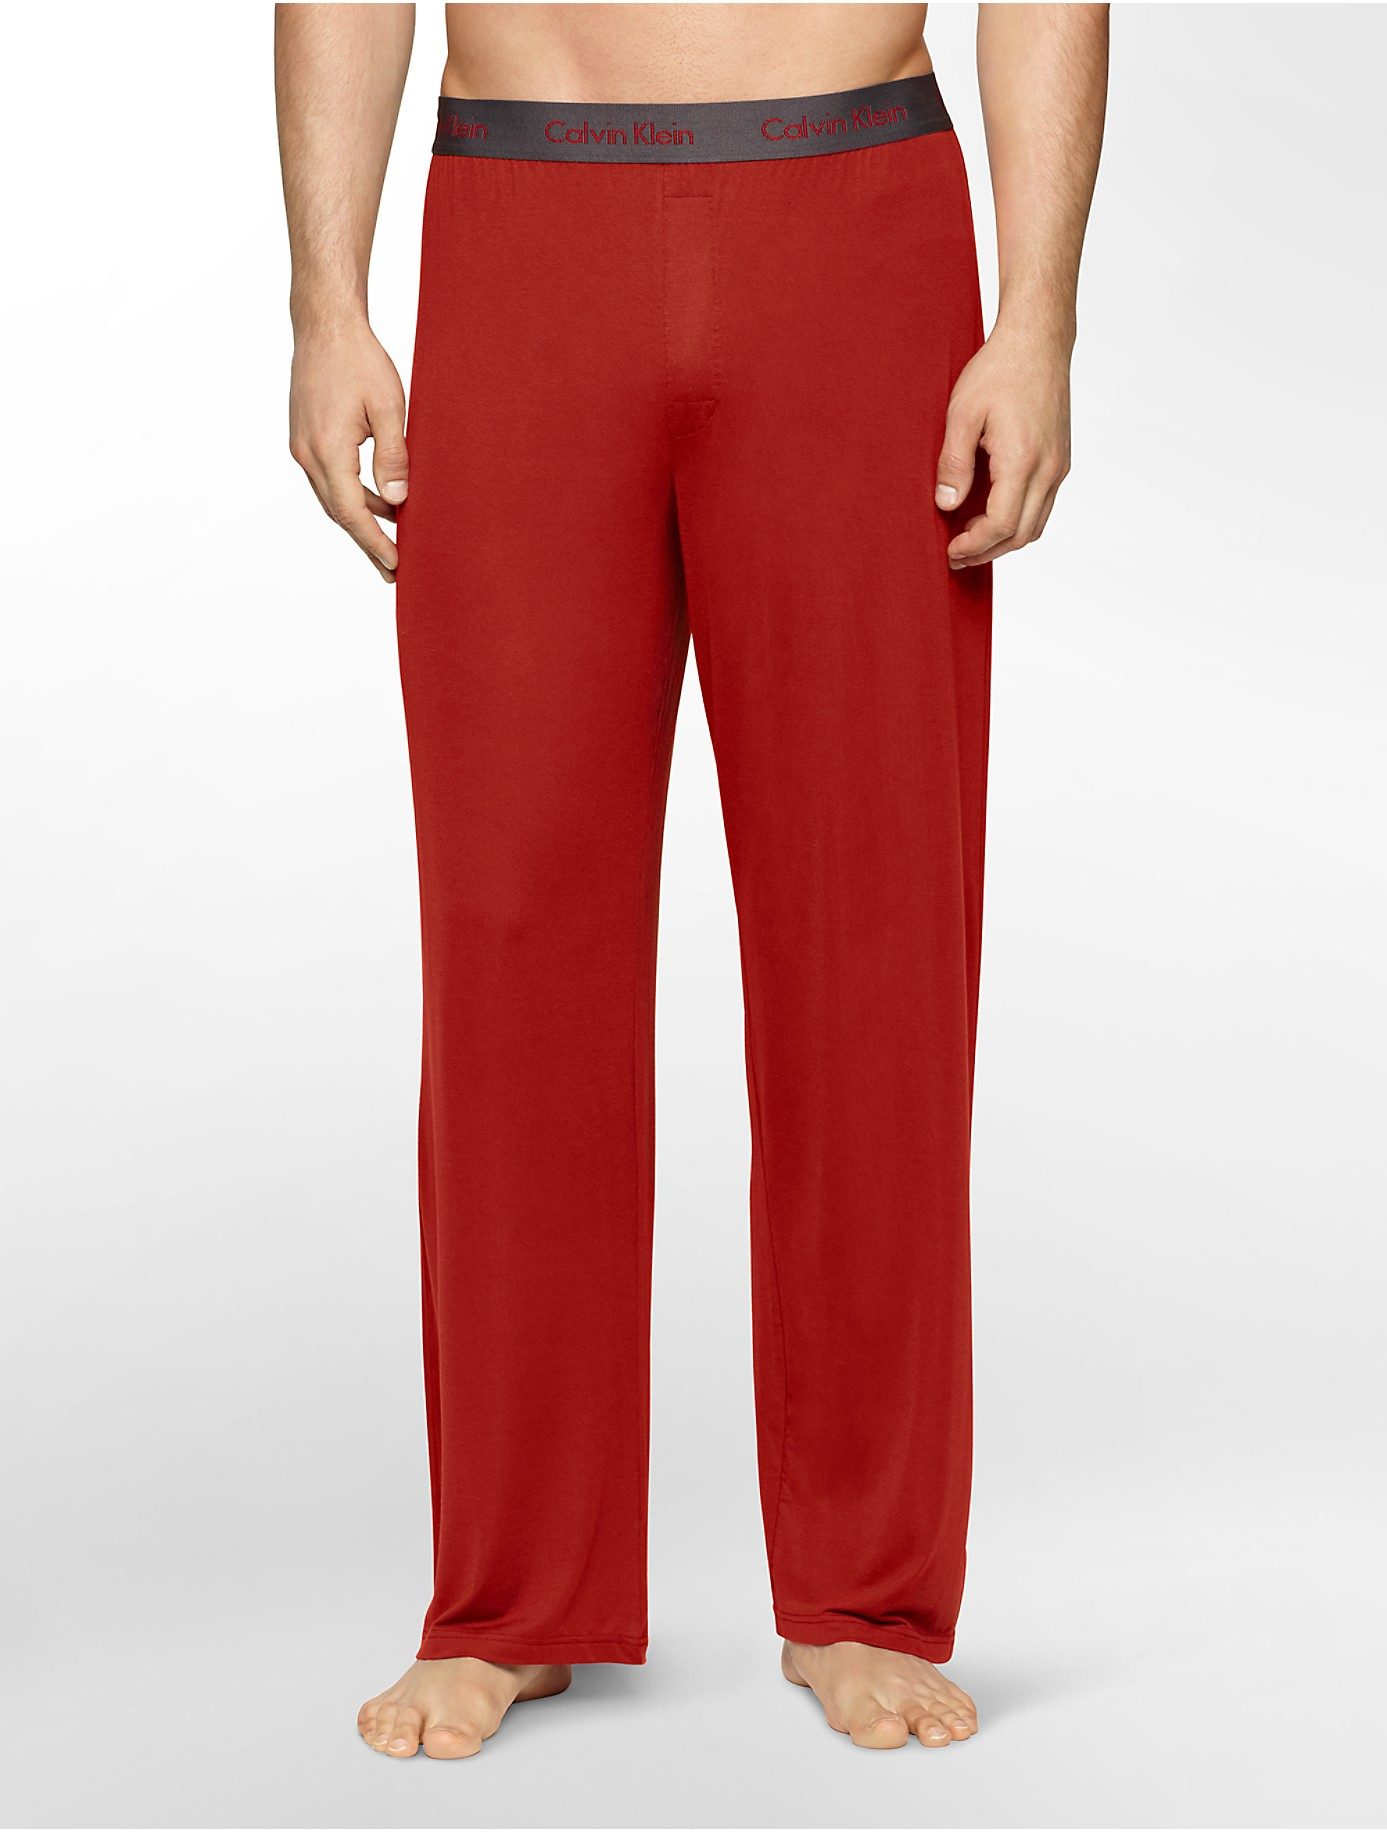 Lyst - Calvin Klein Underwear Body Modal Pajama Pant in Red for Men